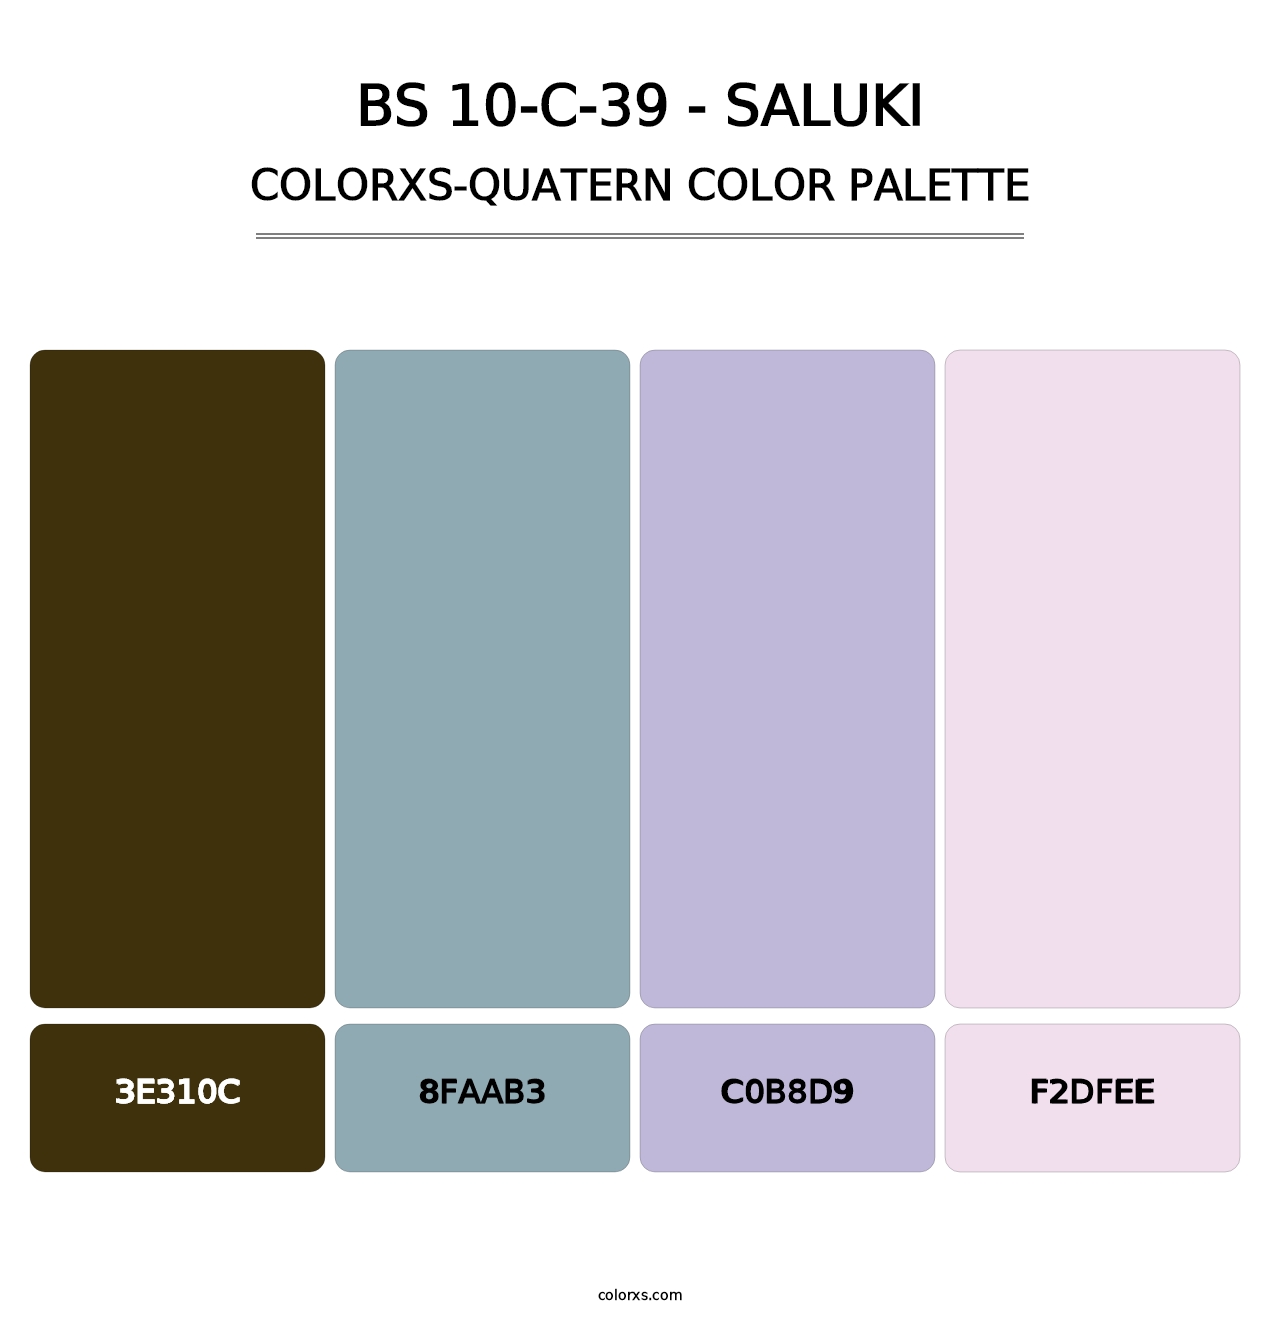 BS 10-C-39 - Saluki - Colorxs Quatern Palette